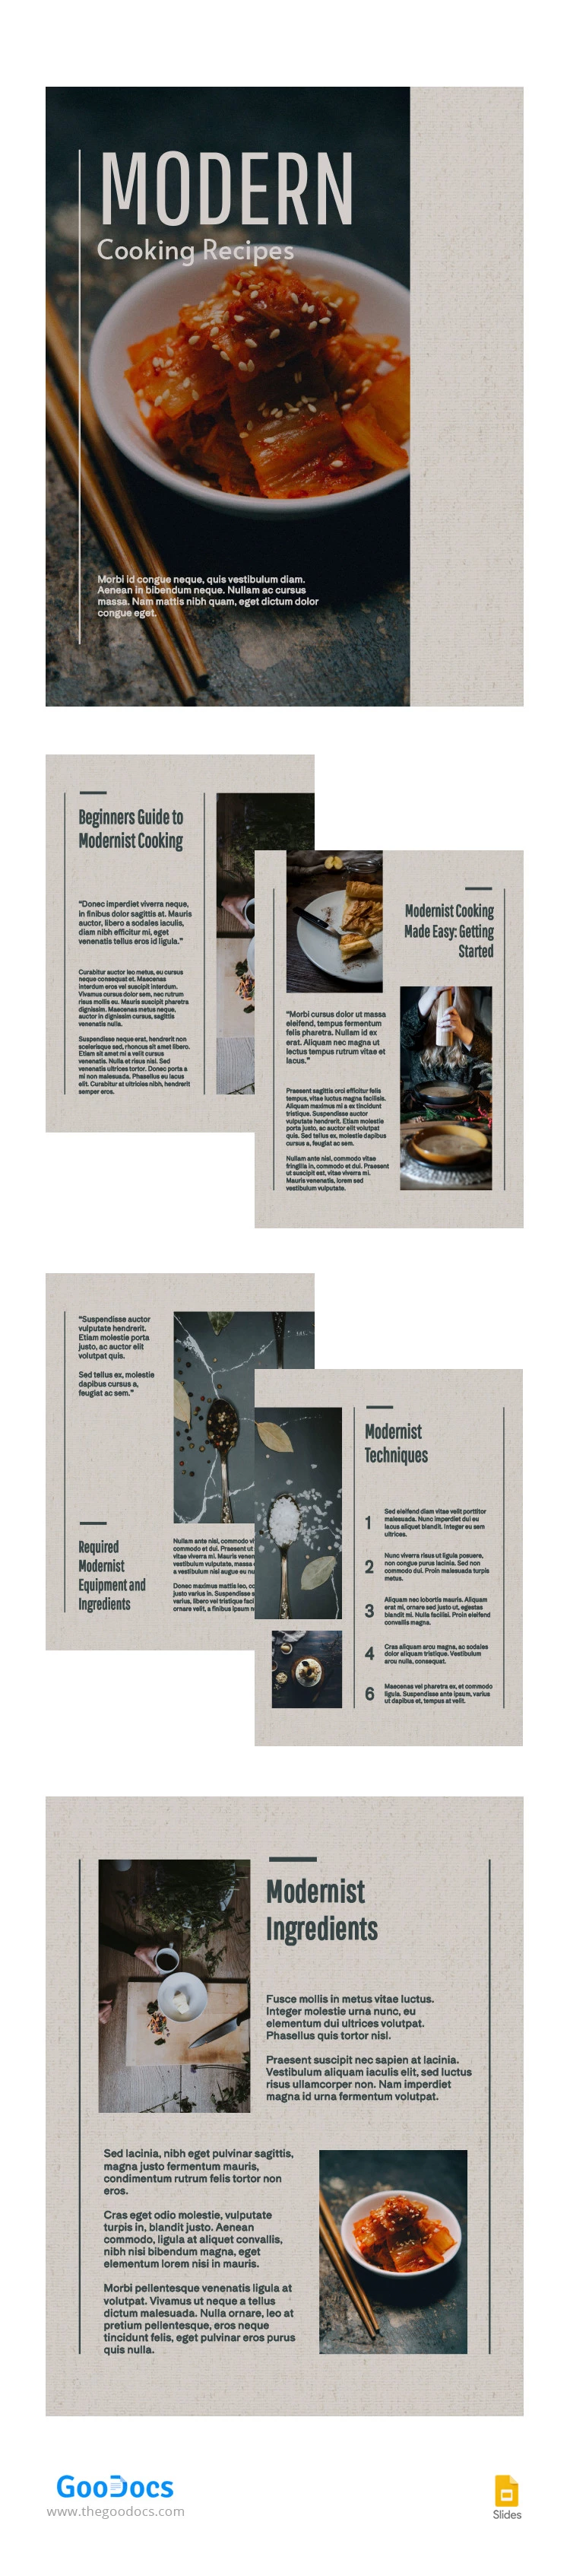 Revista de Recetas de Cocina Moderna - free Google Docs Template - 10065325